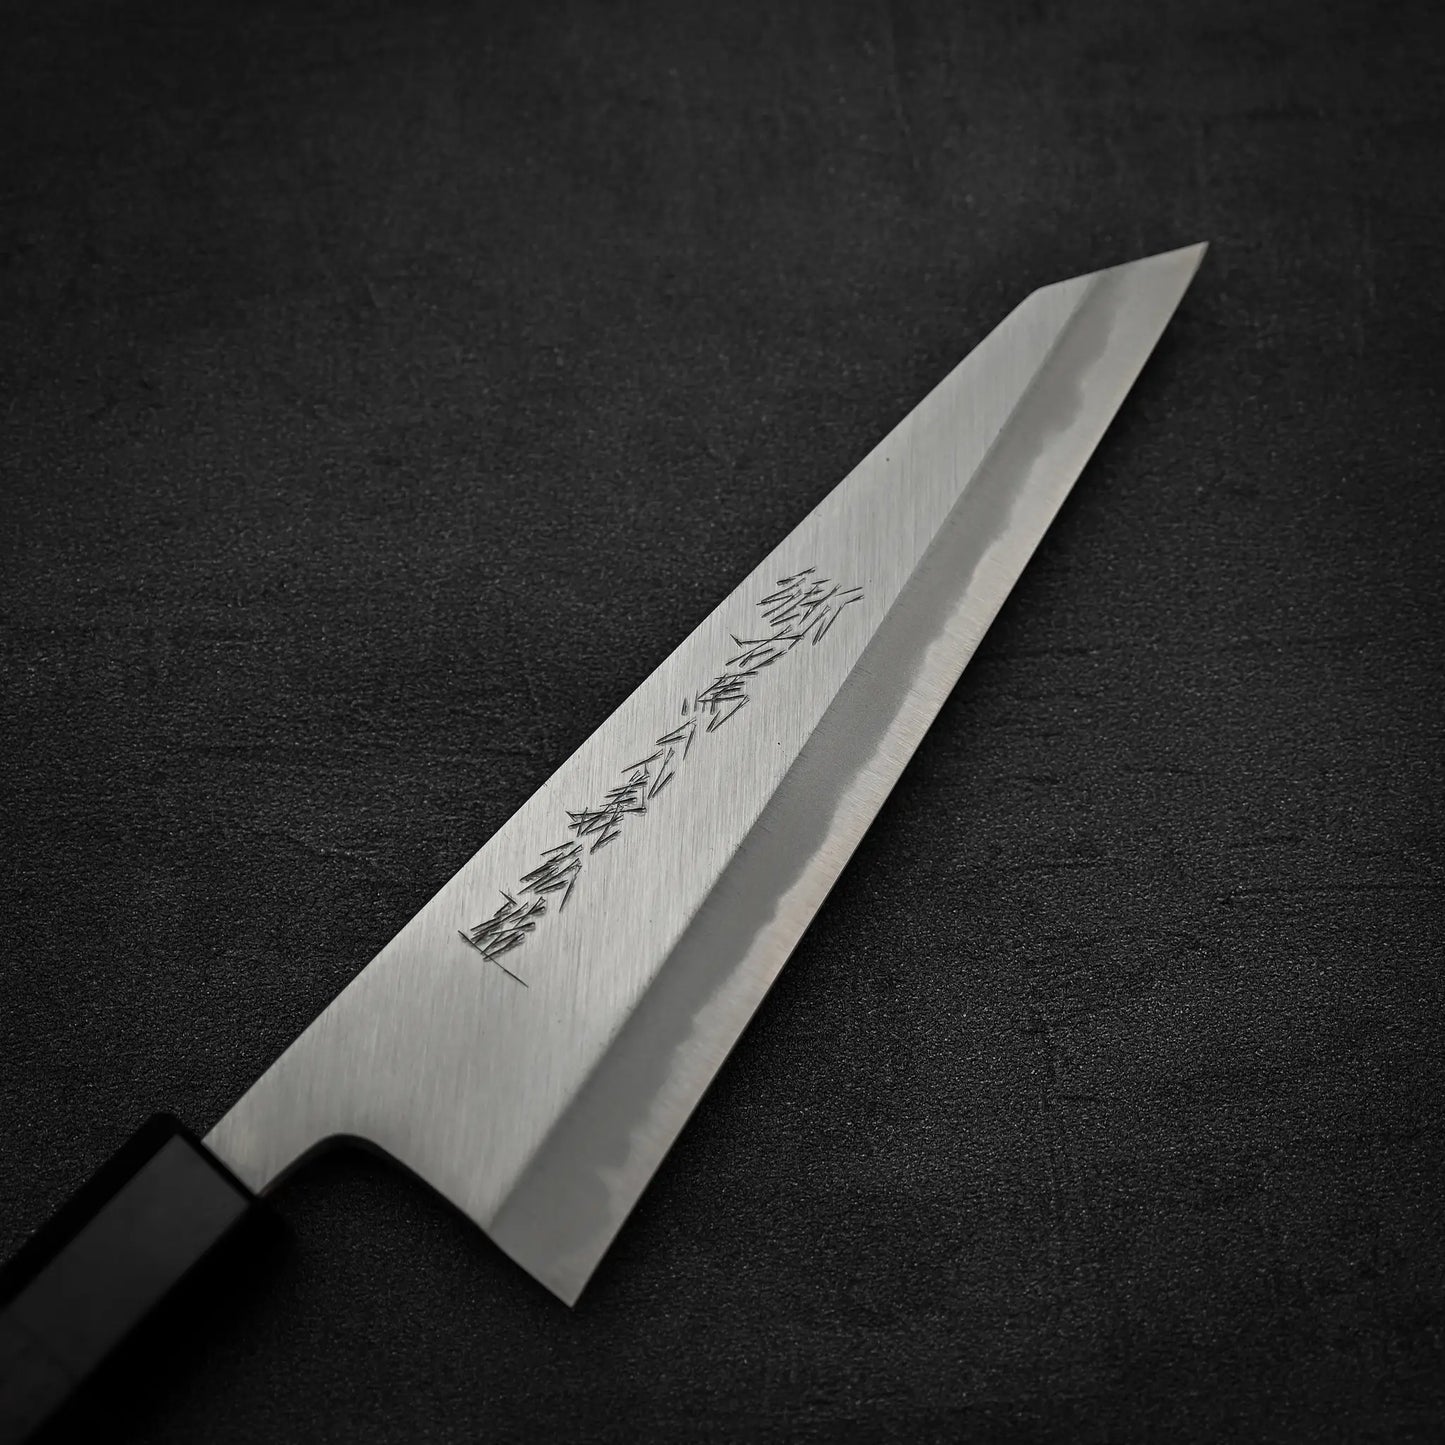 A close up view of the front blade of Yoshikazu Tanaka shirogami#1 double bevel honesuki knife